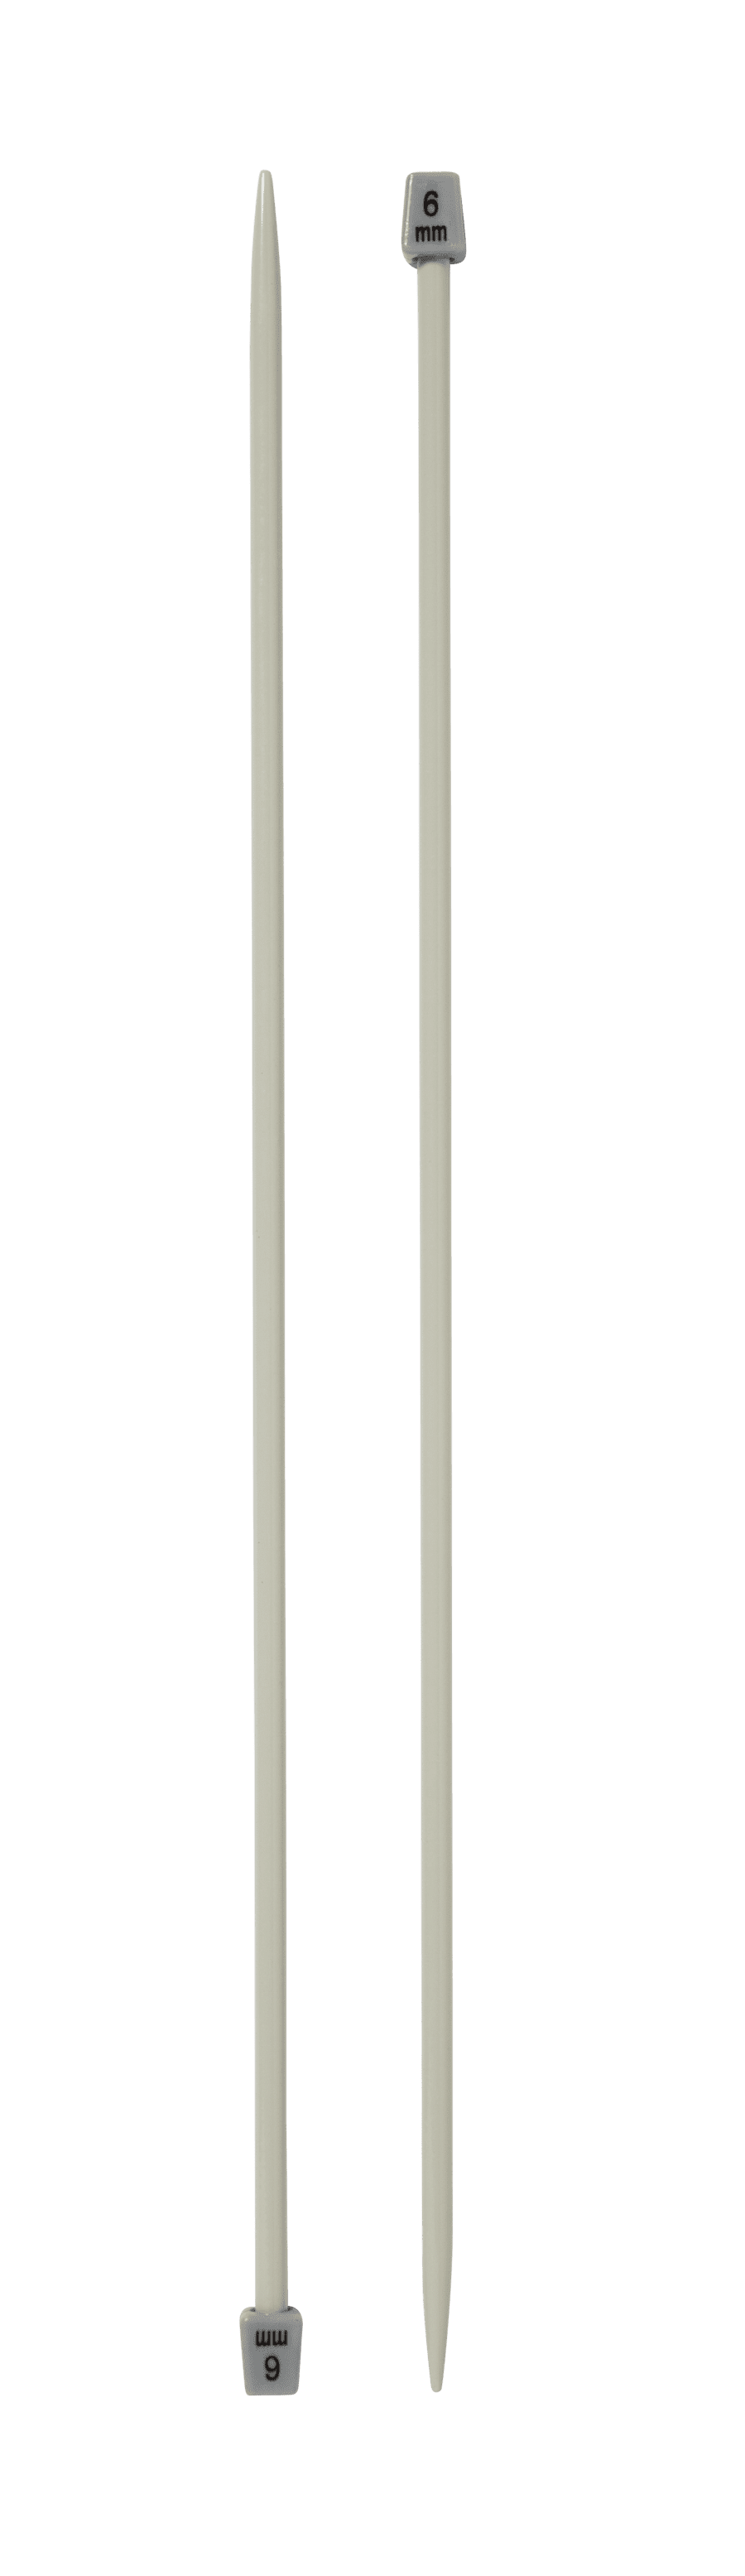 Breinaalden – 2 – 7 mm – Variatie 5 - Wibra